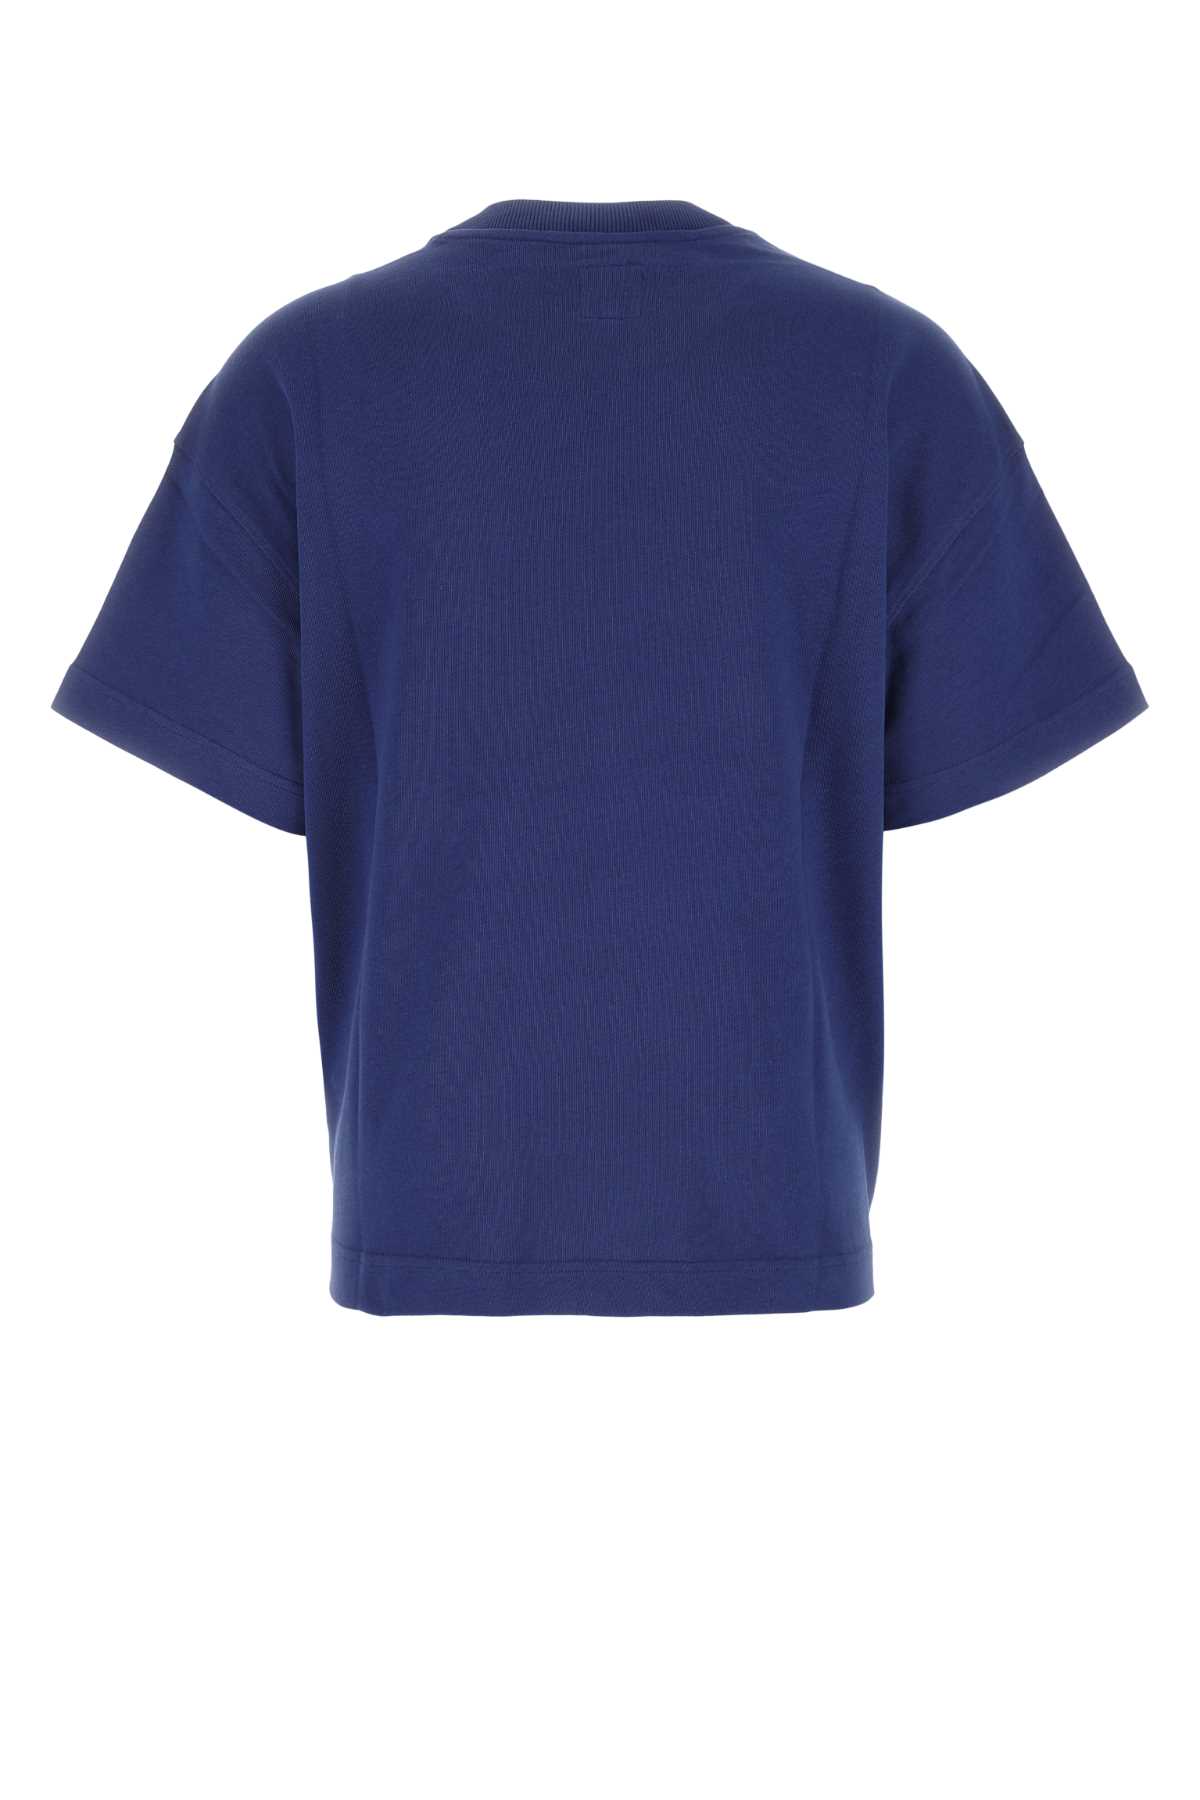 Emporio Armani Blue Cotton Oversize T-shirt In Oceano